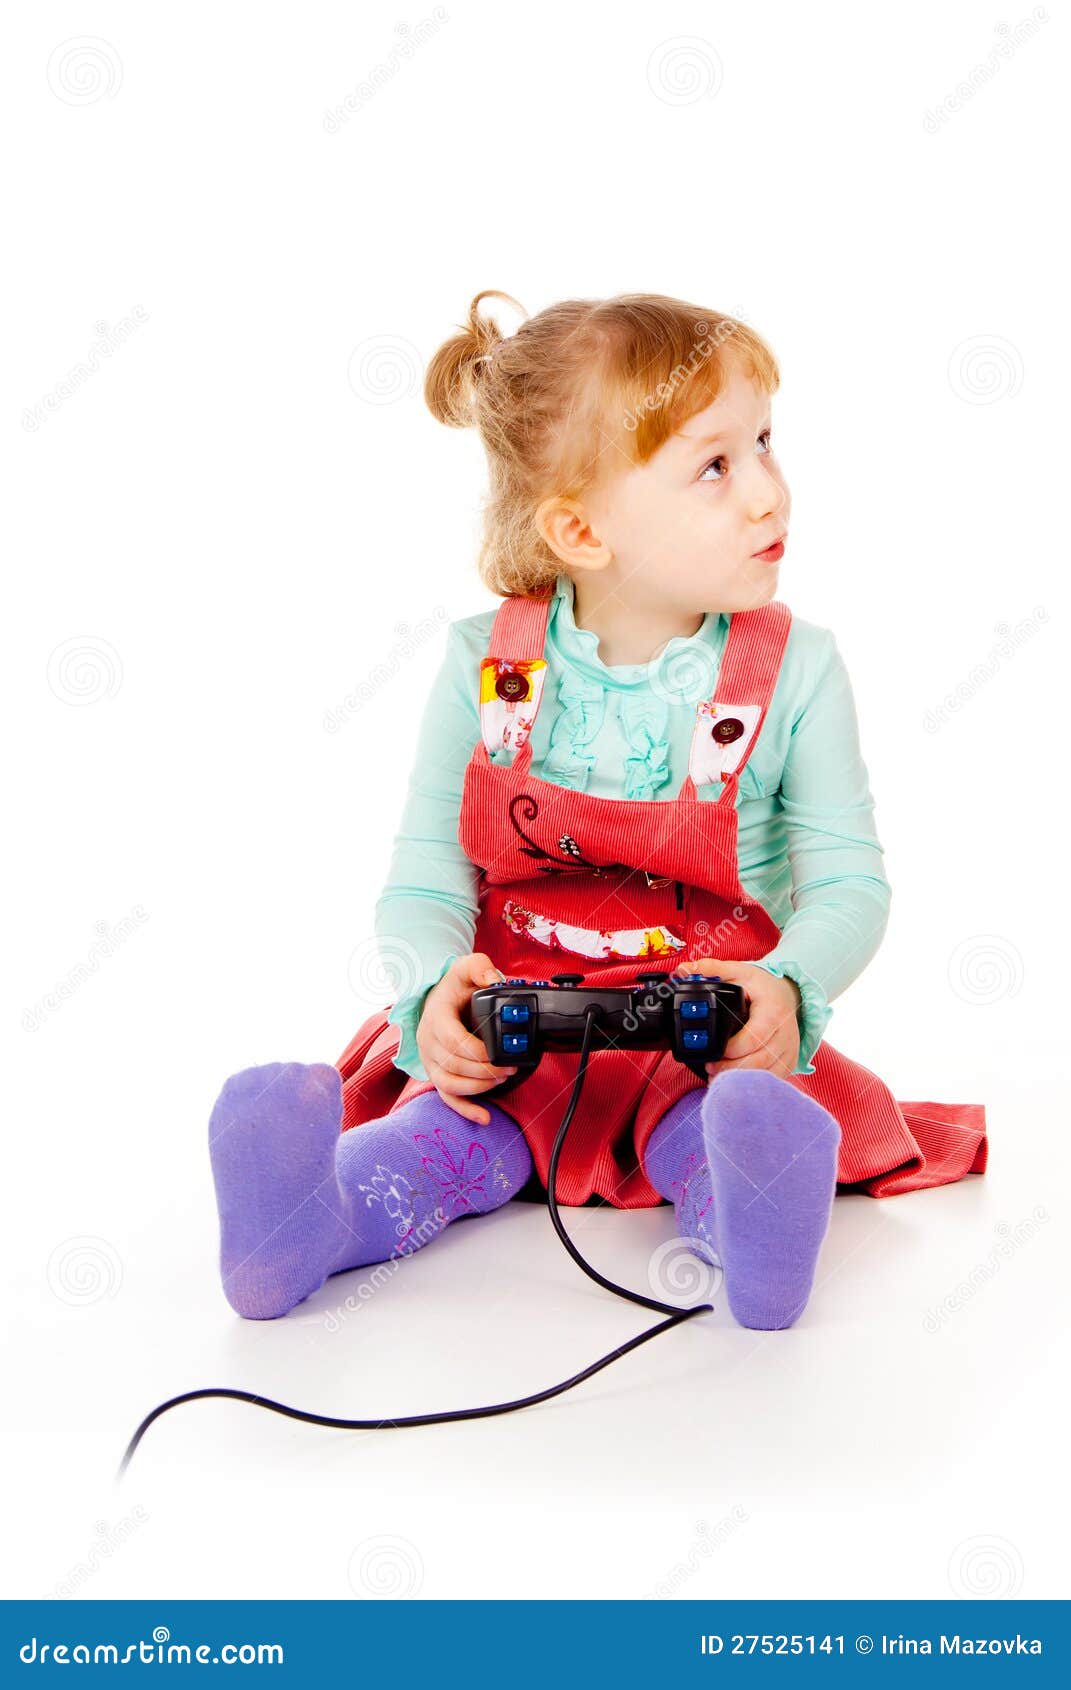 little girl video games